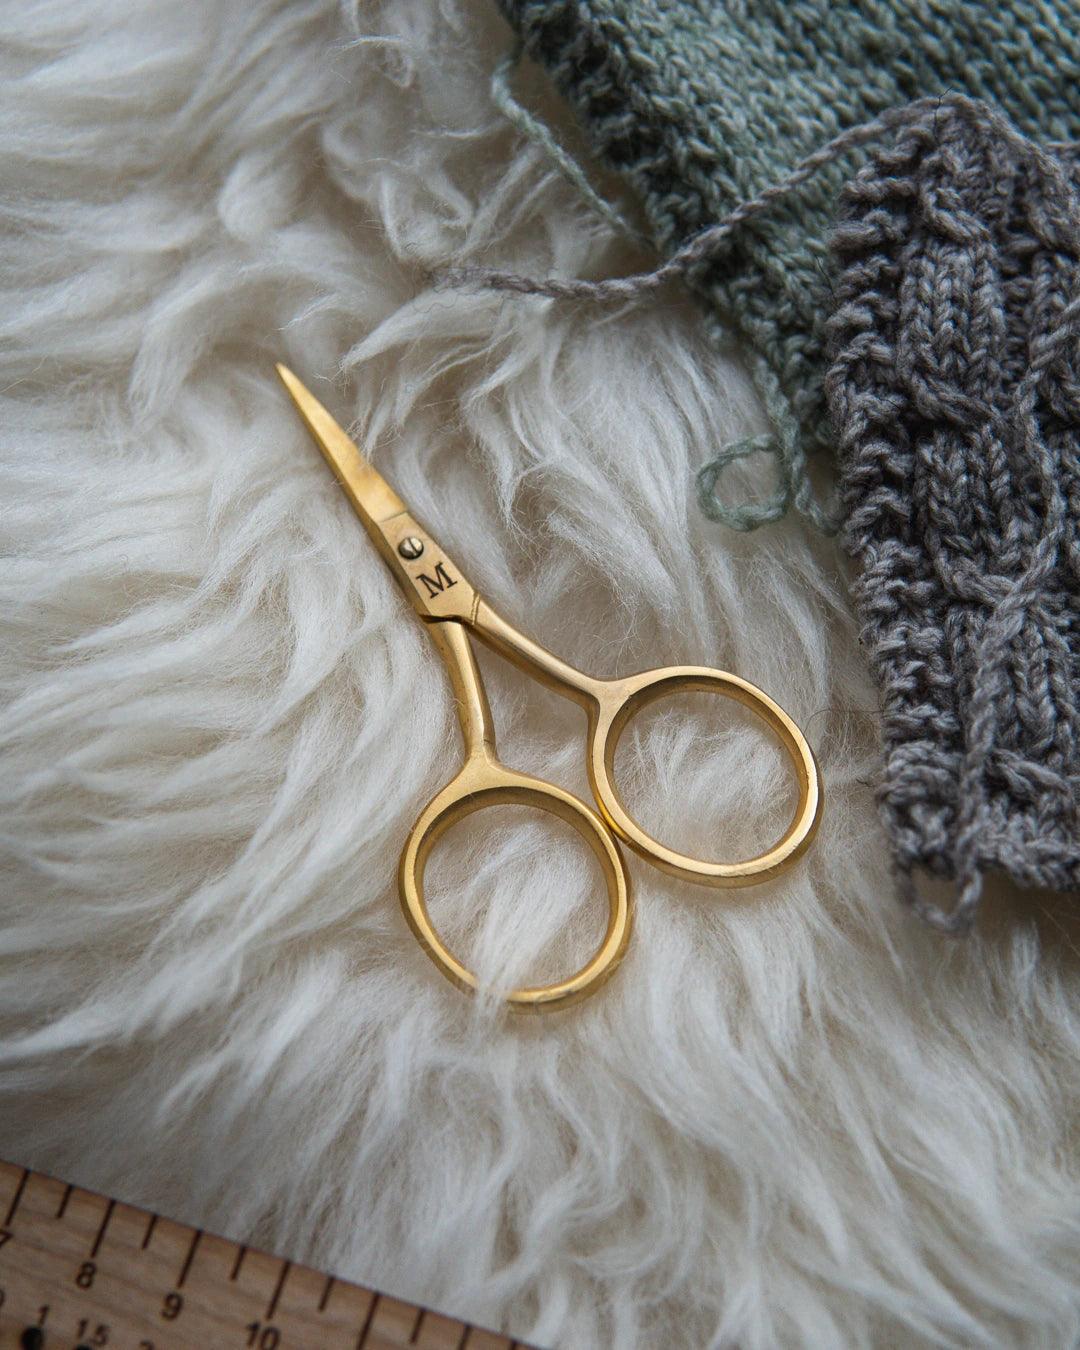 Fine Work Gold Scissors - Aimee Sher Makes